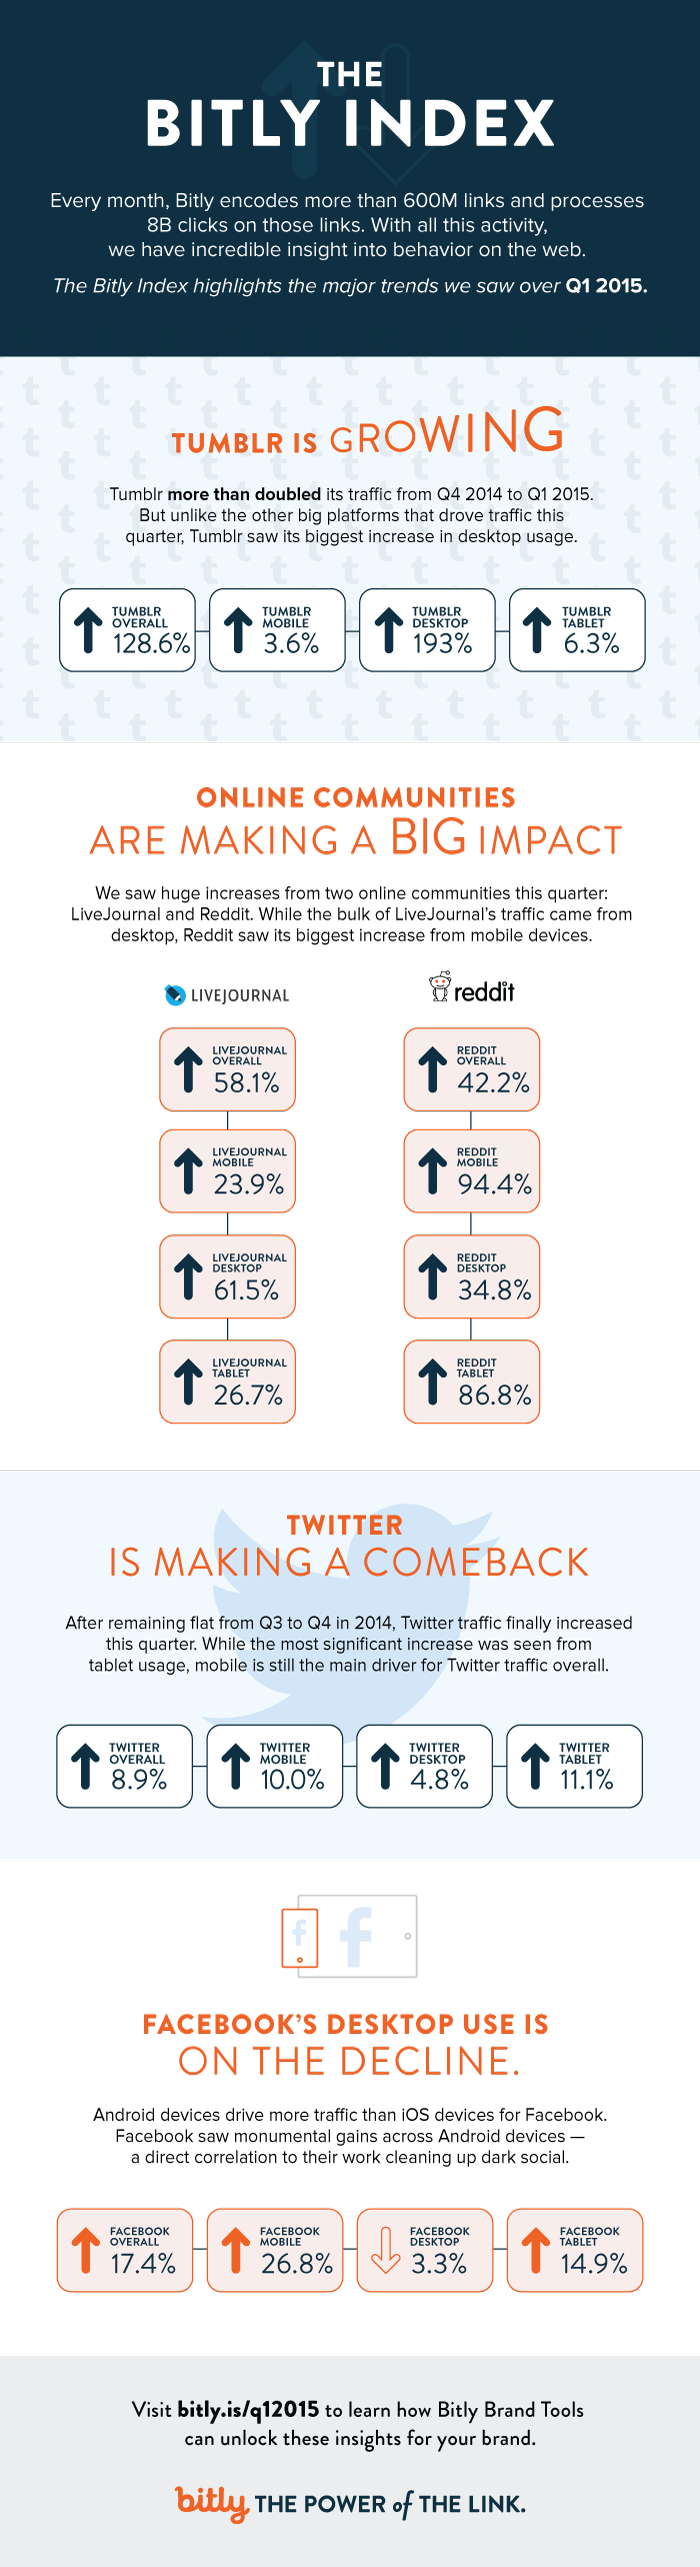 Tumblr, Reddit, Twitter, Facebook: Social Networking Trends Q1 2015 - #infographic